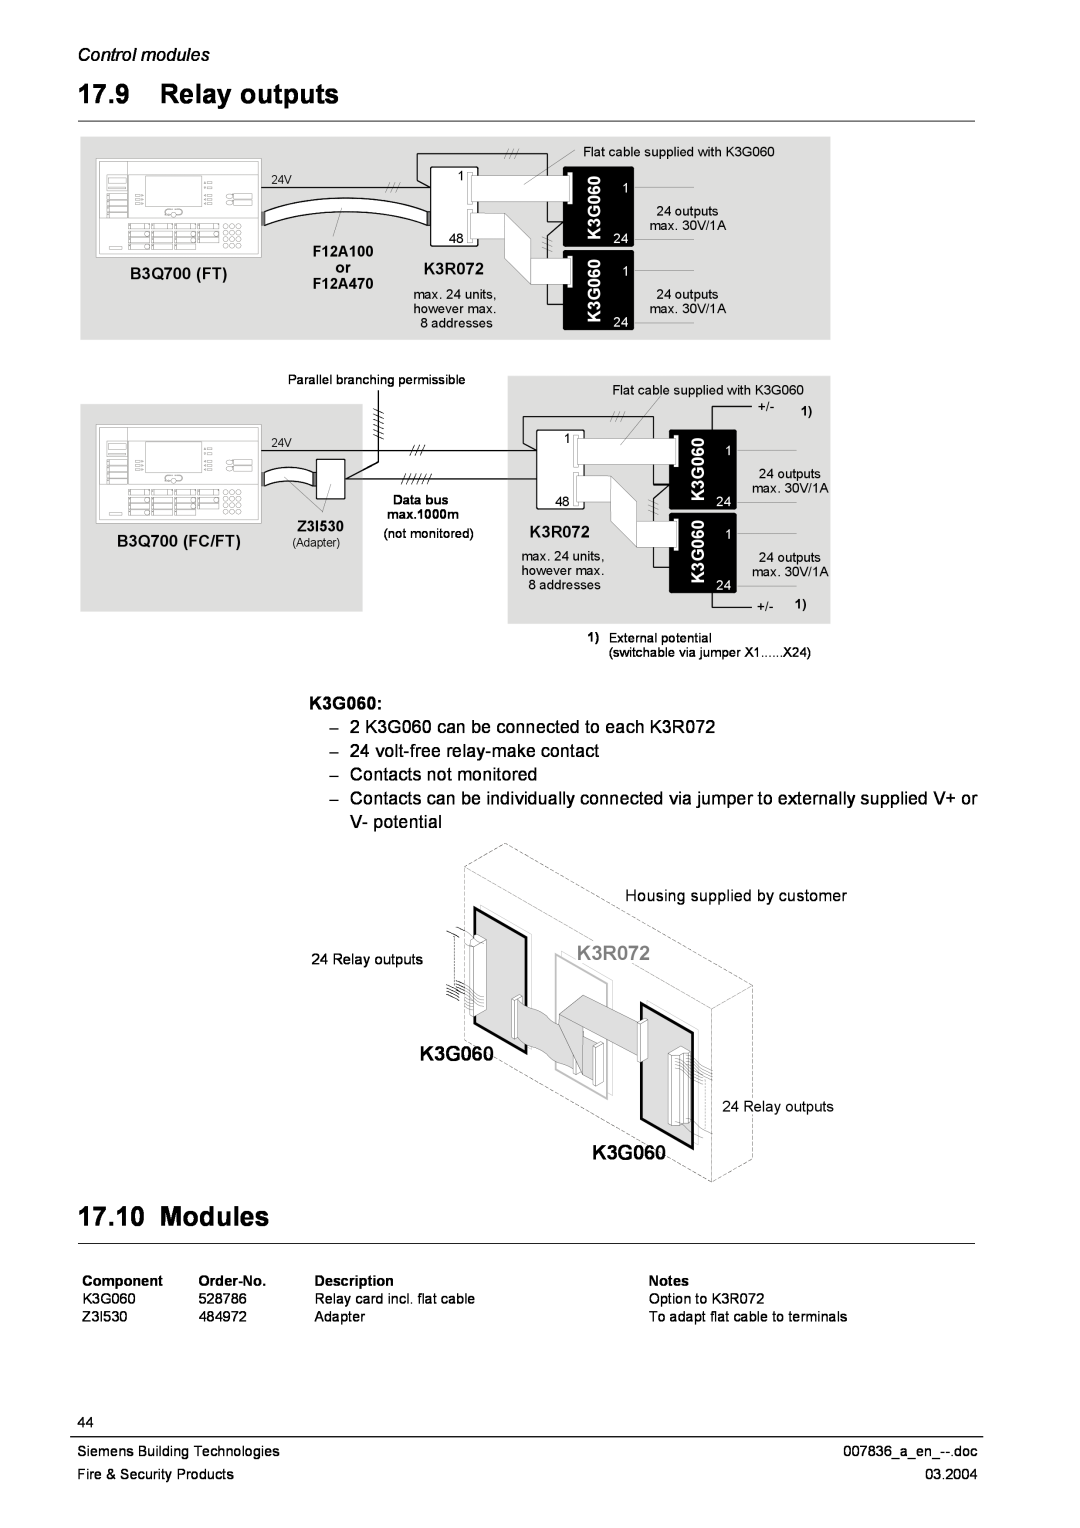 Siemens FC700A manual 17.9Relay outputs, Modules, K3G060, K3R072, Control modules 